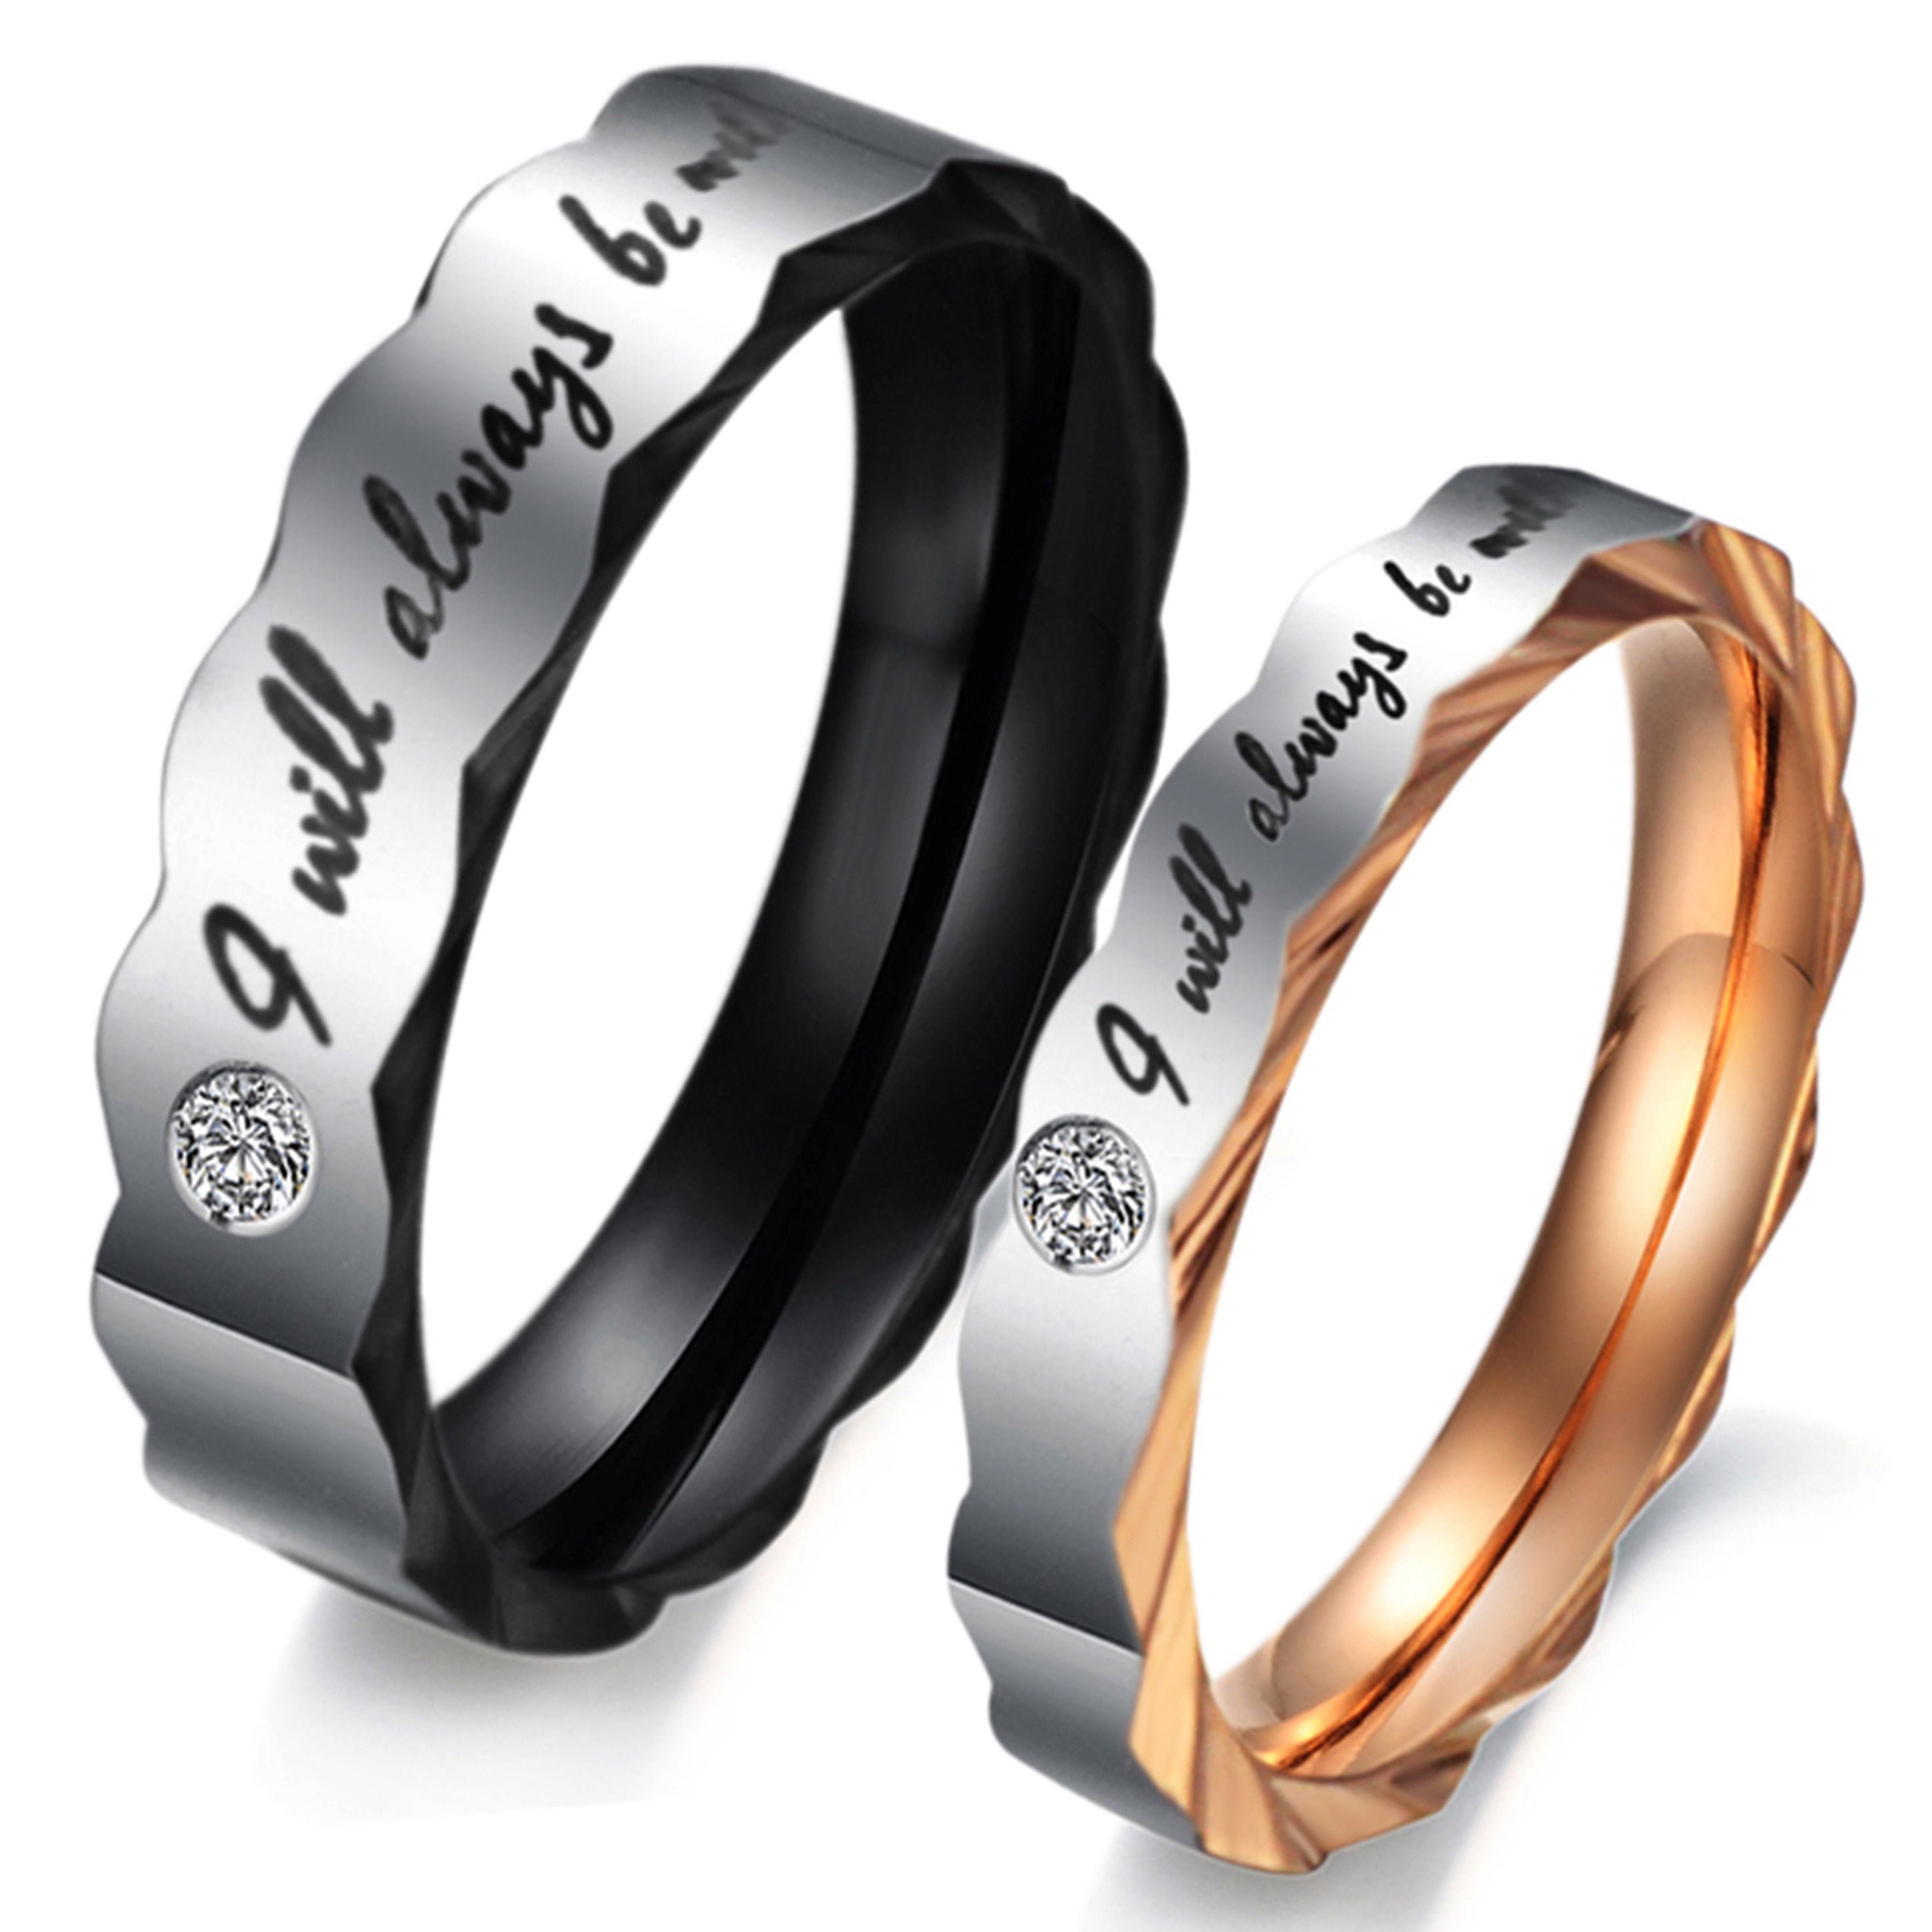 Fashion Men's Titanium Stainless Steel Ring Engagement Wedding Ring Gift Decor 